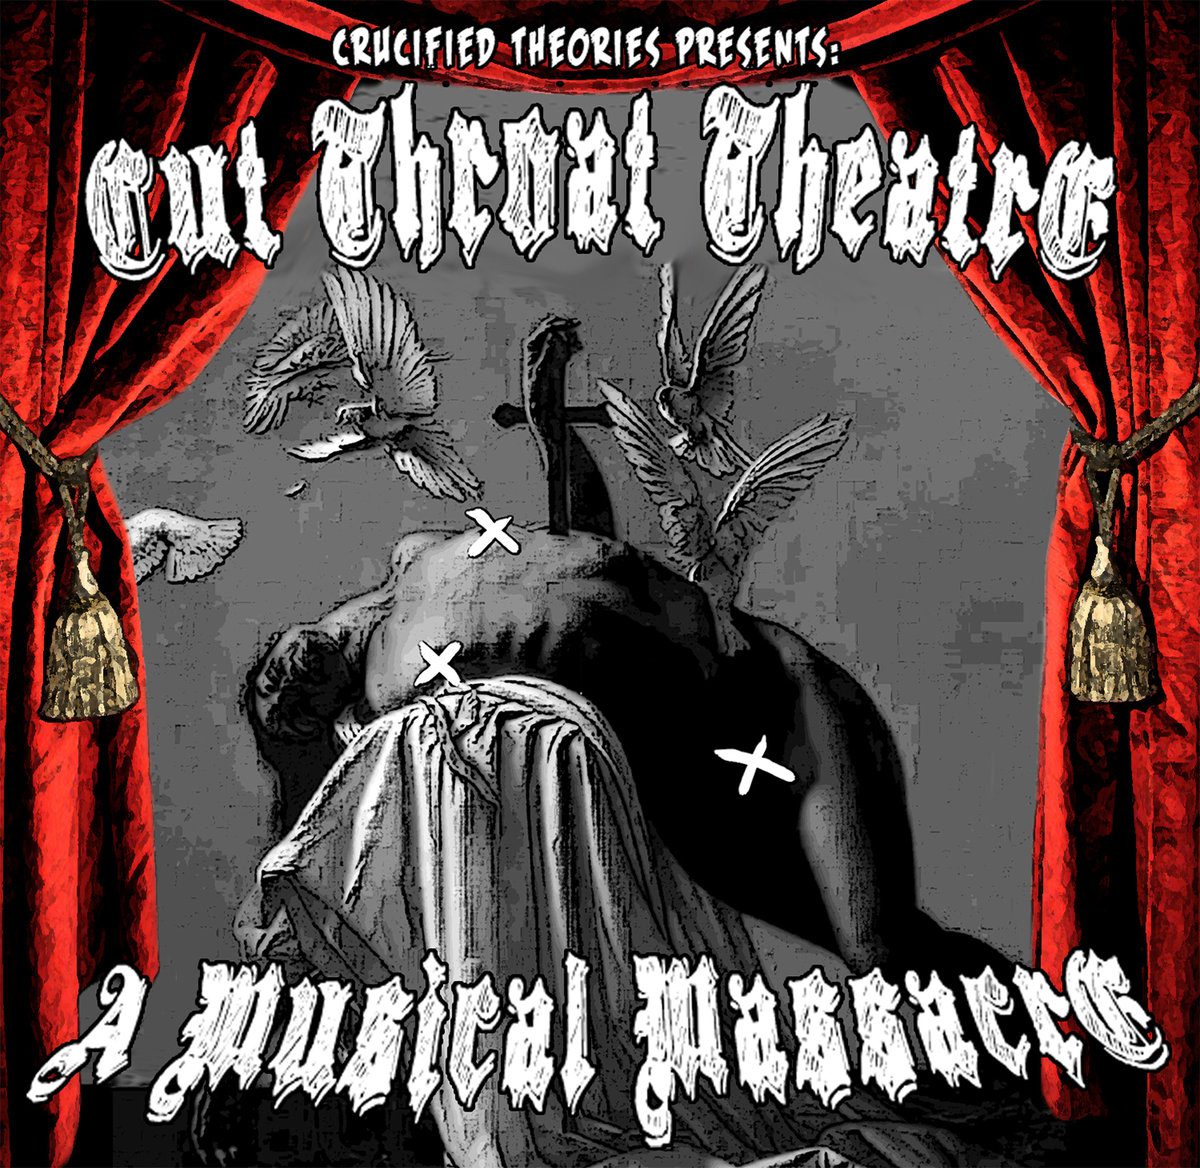 Crucified Theories - Cut Throat Theatre, A Musical Massacre (Mixtape)